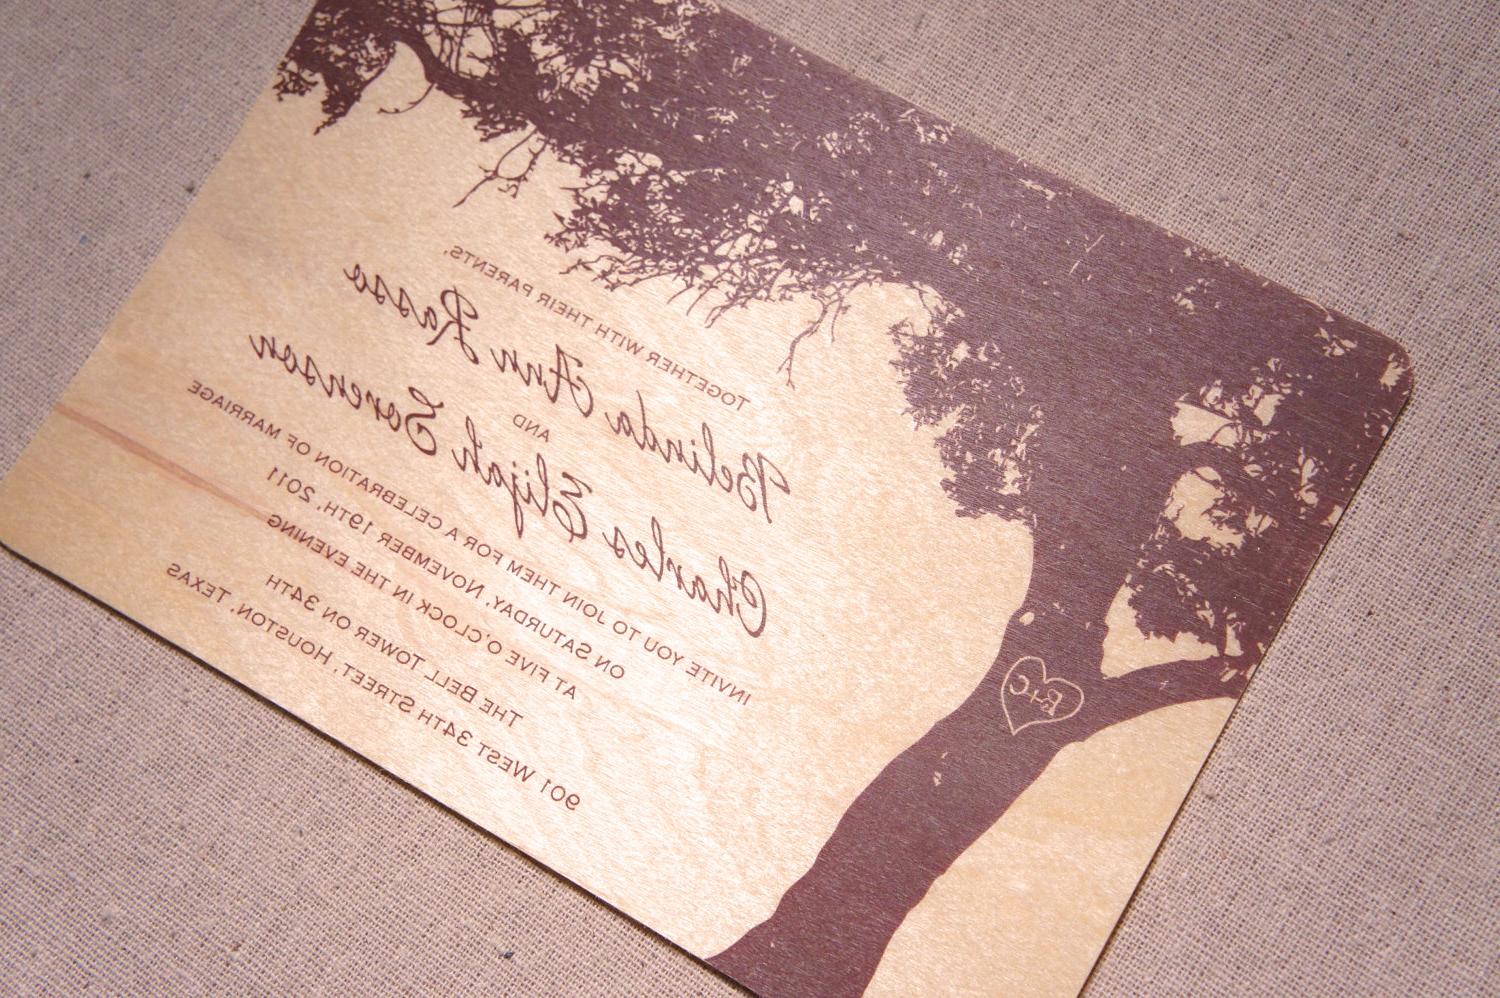 Real Wood Wedding Invitations - Oak Tree Silhouette. From woodchickstudios